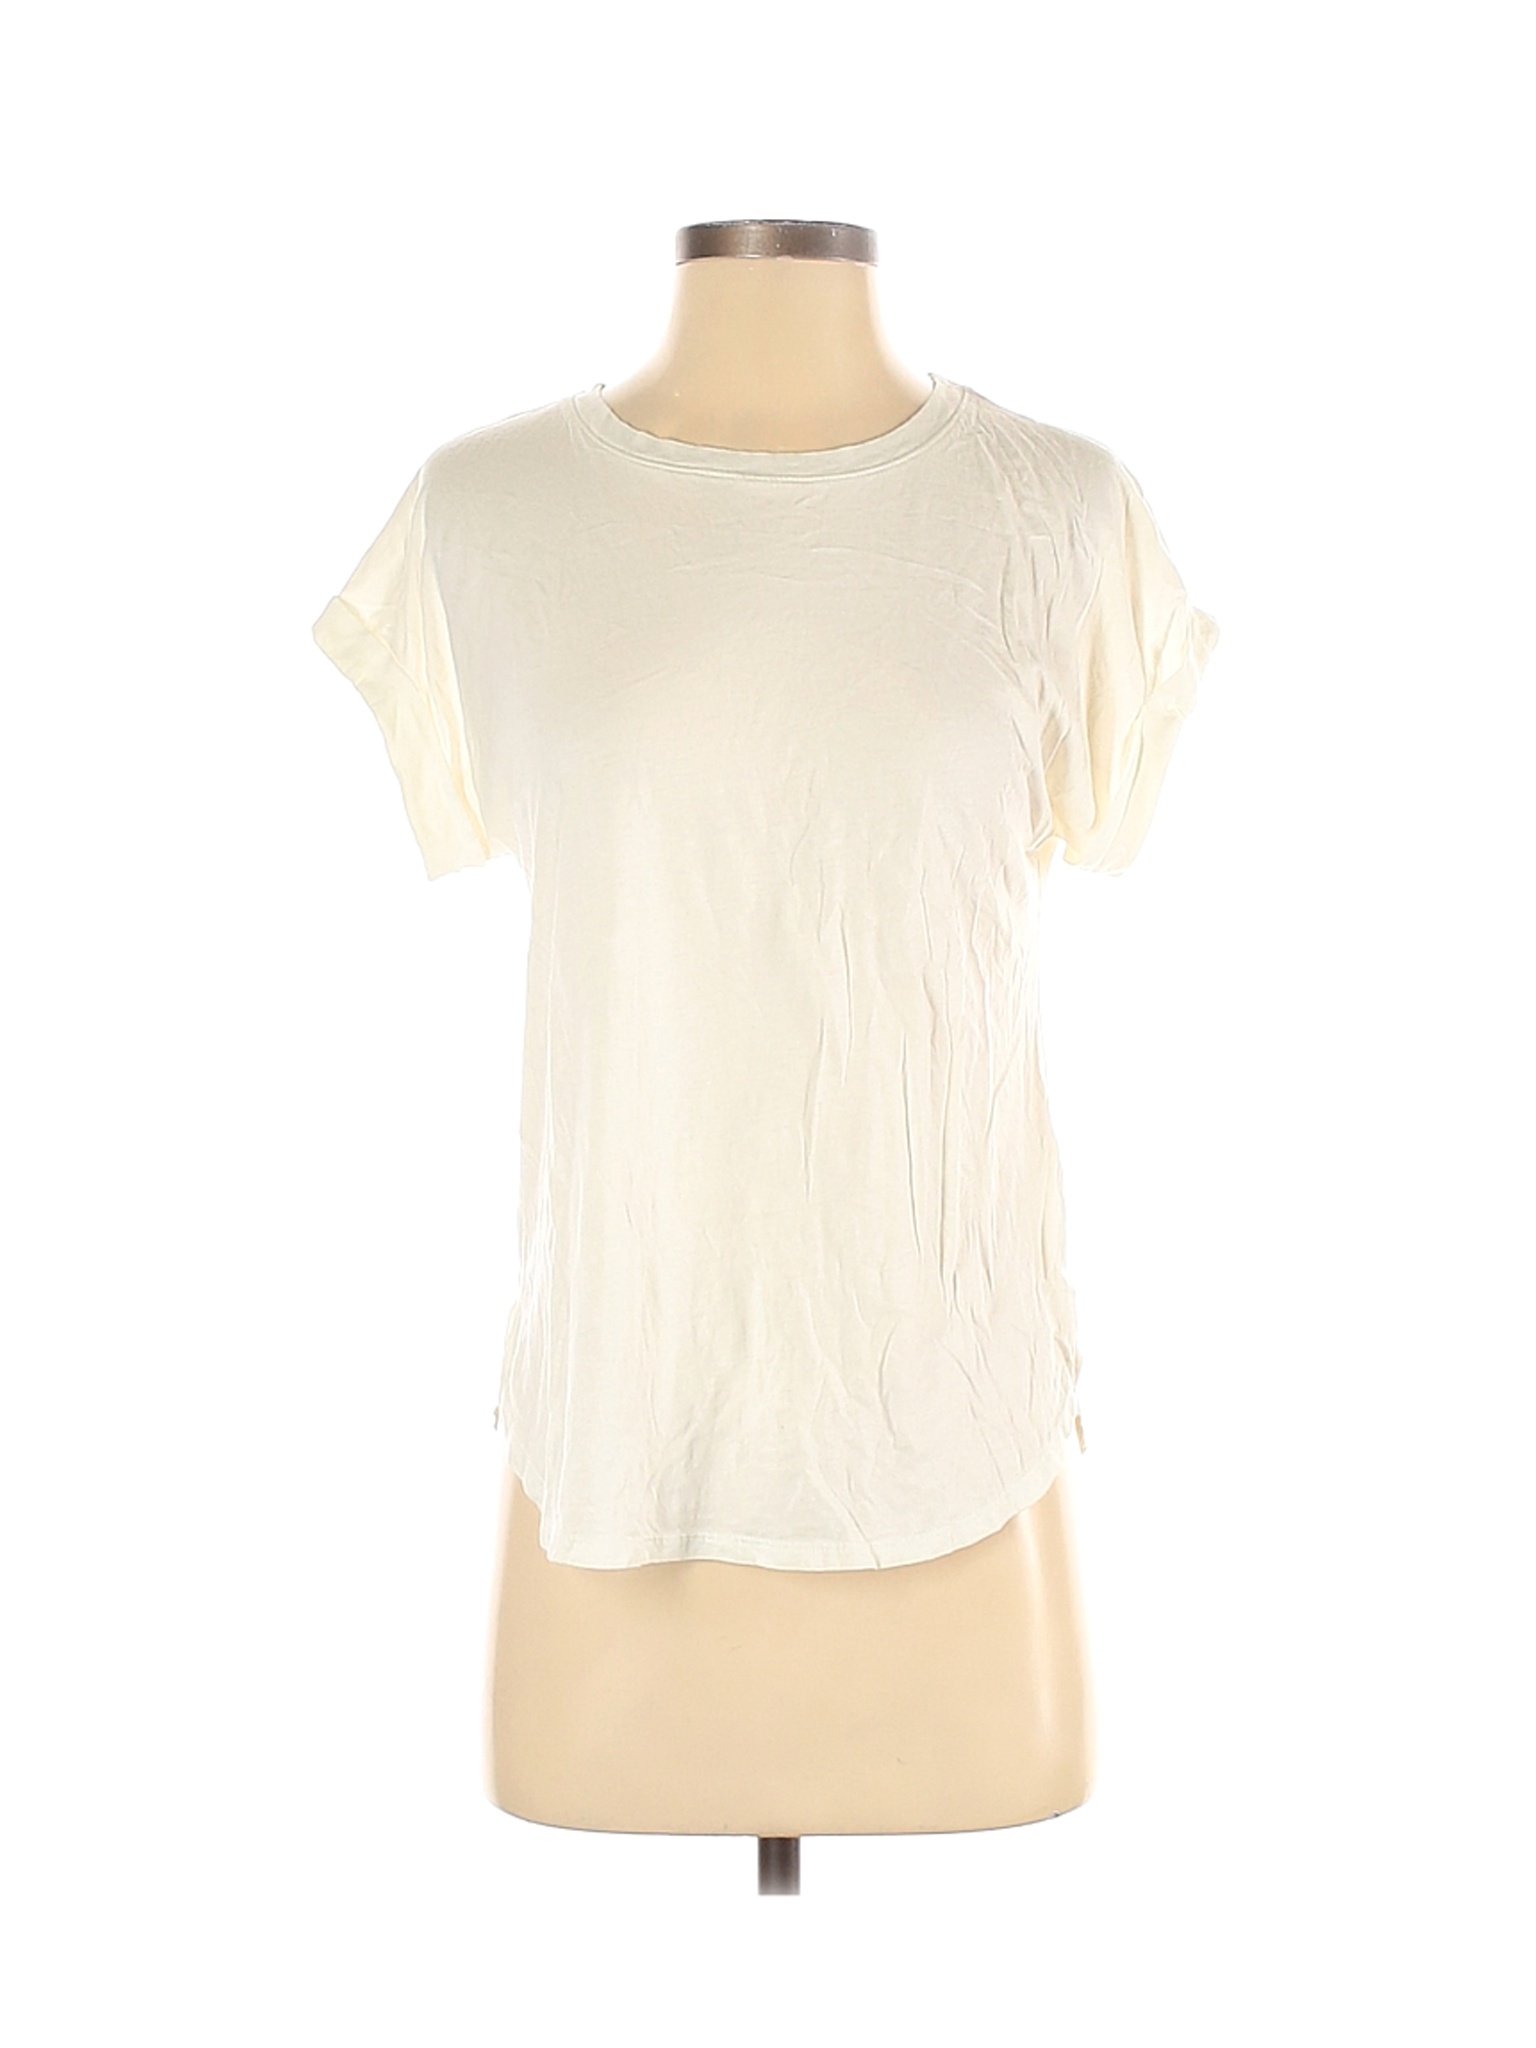 A New Day Women Ivory Short Sleeve T-Shirt S | eBay